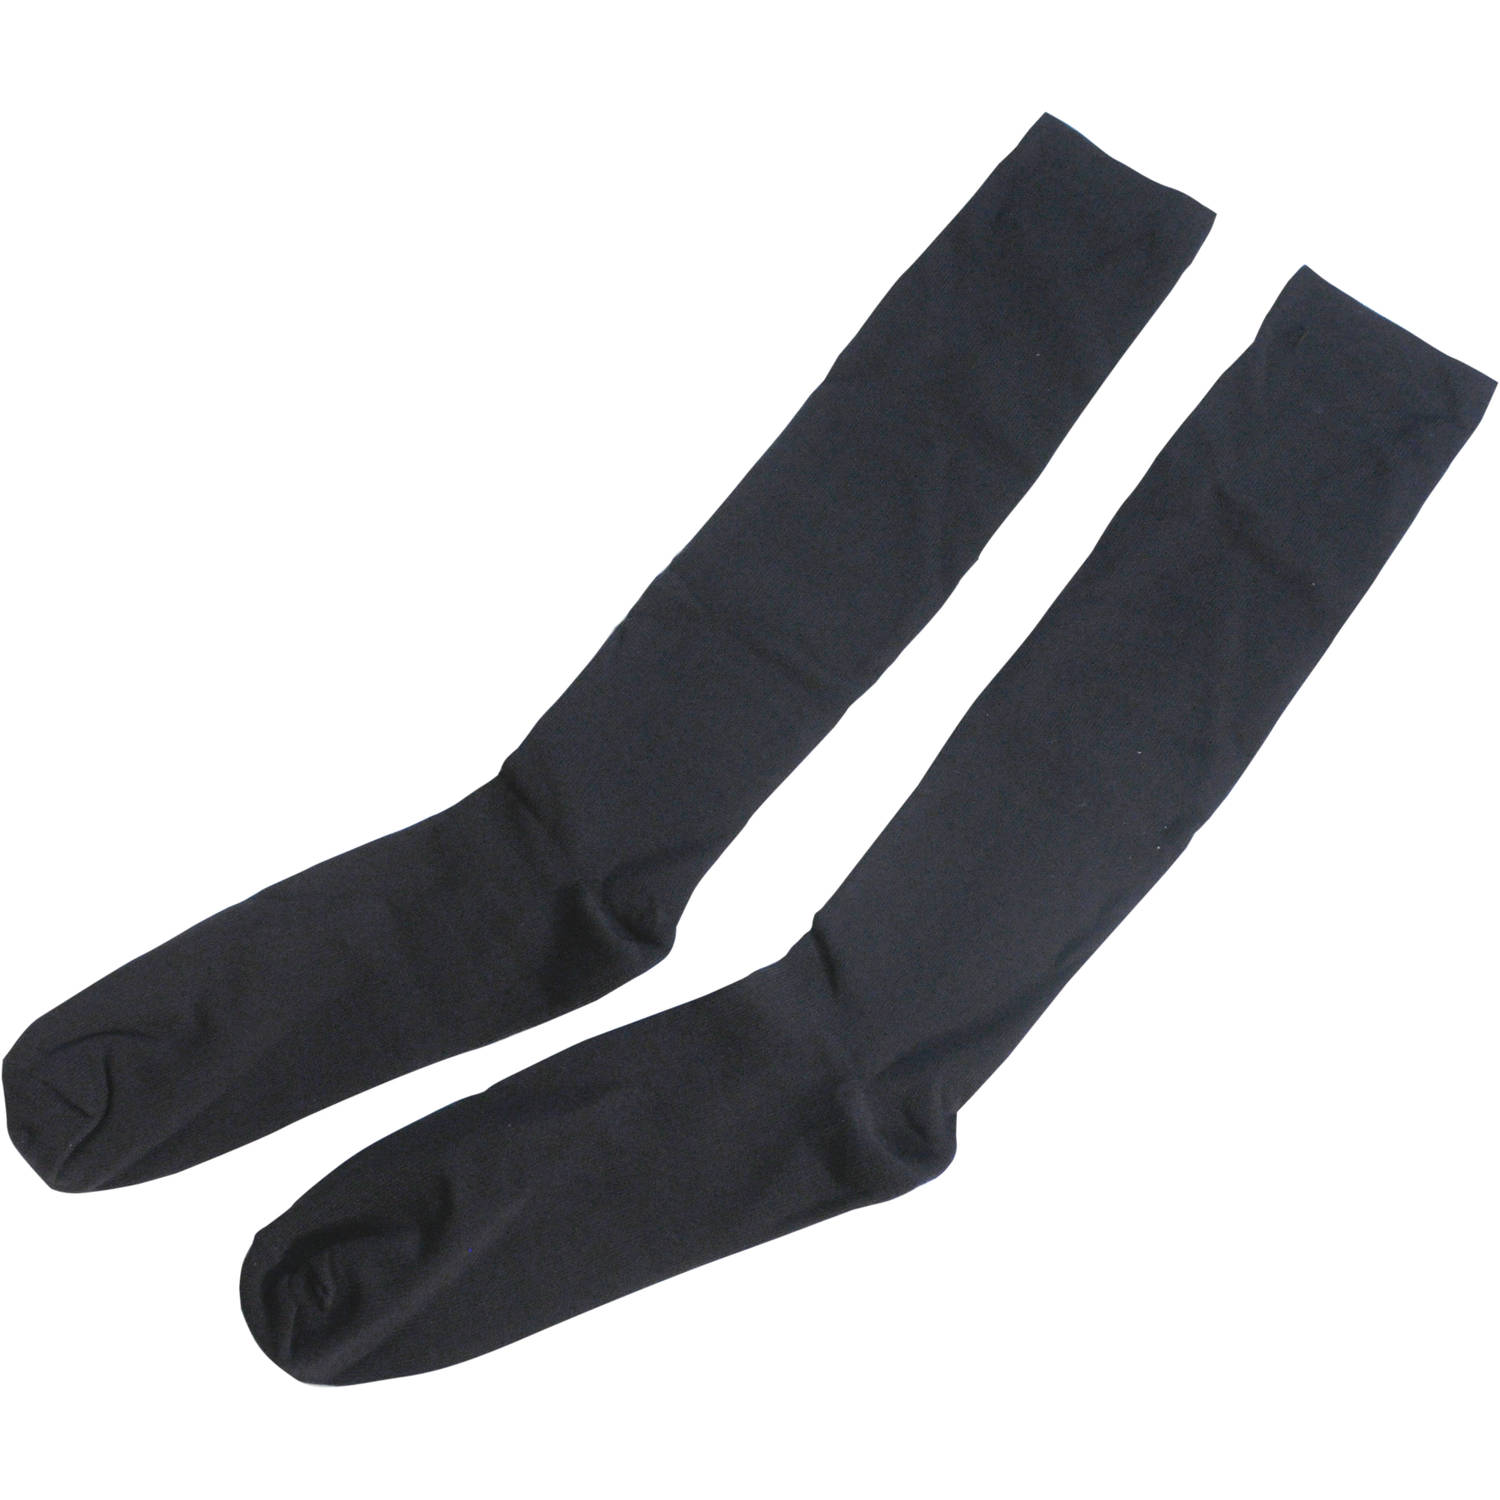 Roama compressie sokken - compressie kousen - vliegtuig sokken - steunkousen reis - zwart - M/L